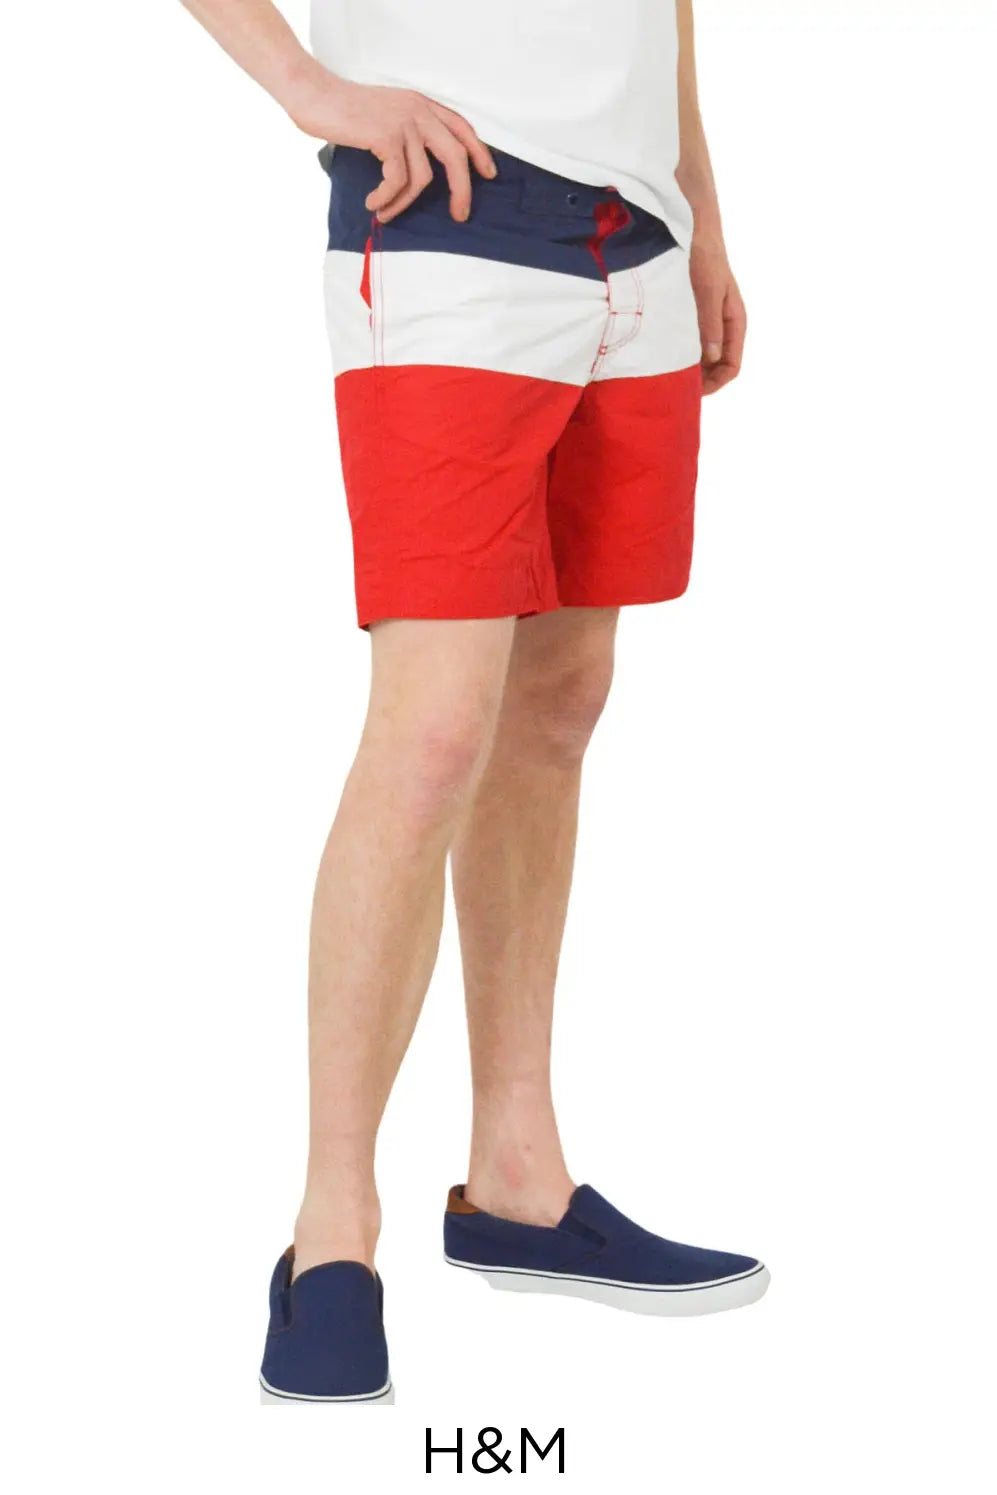 H&M Block Colour Swim Shorts Red/White/Navy / XS